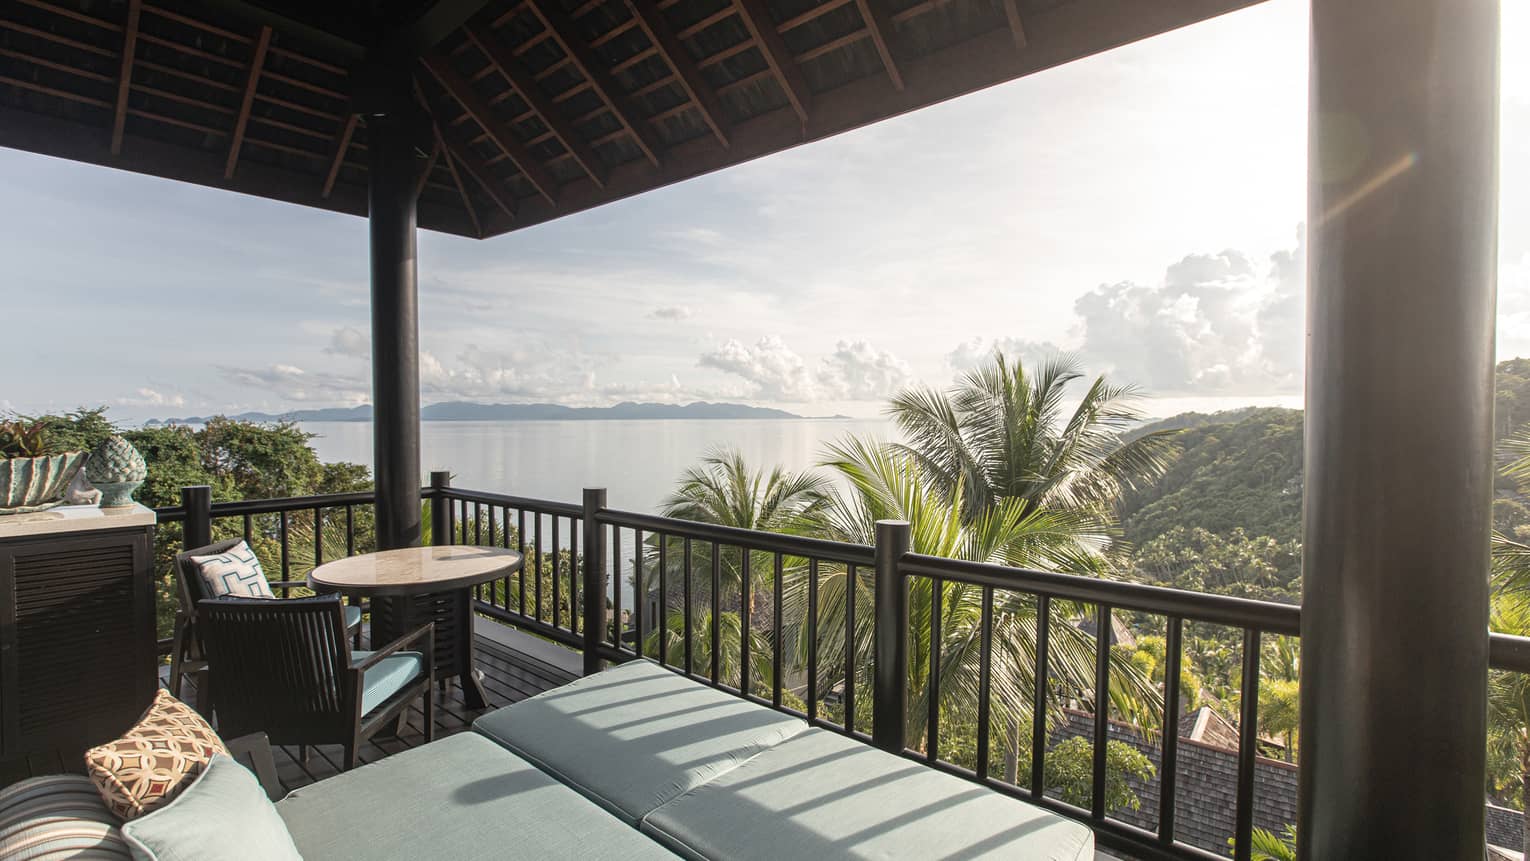 Terrace of private villa overlooking sea in Koh Samui